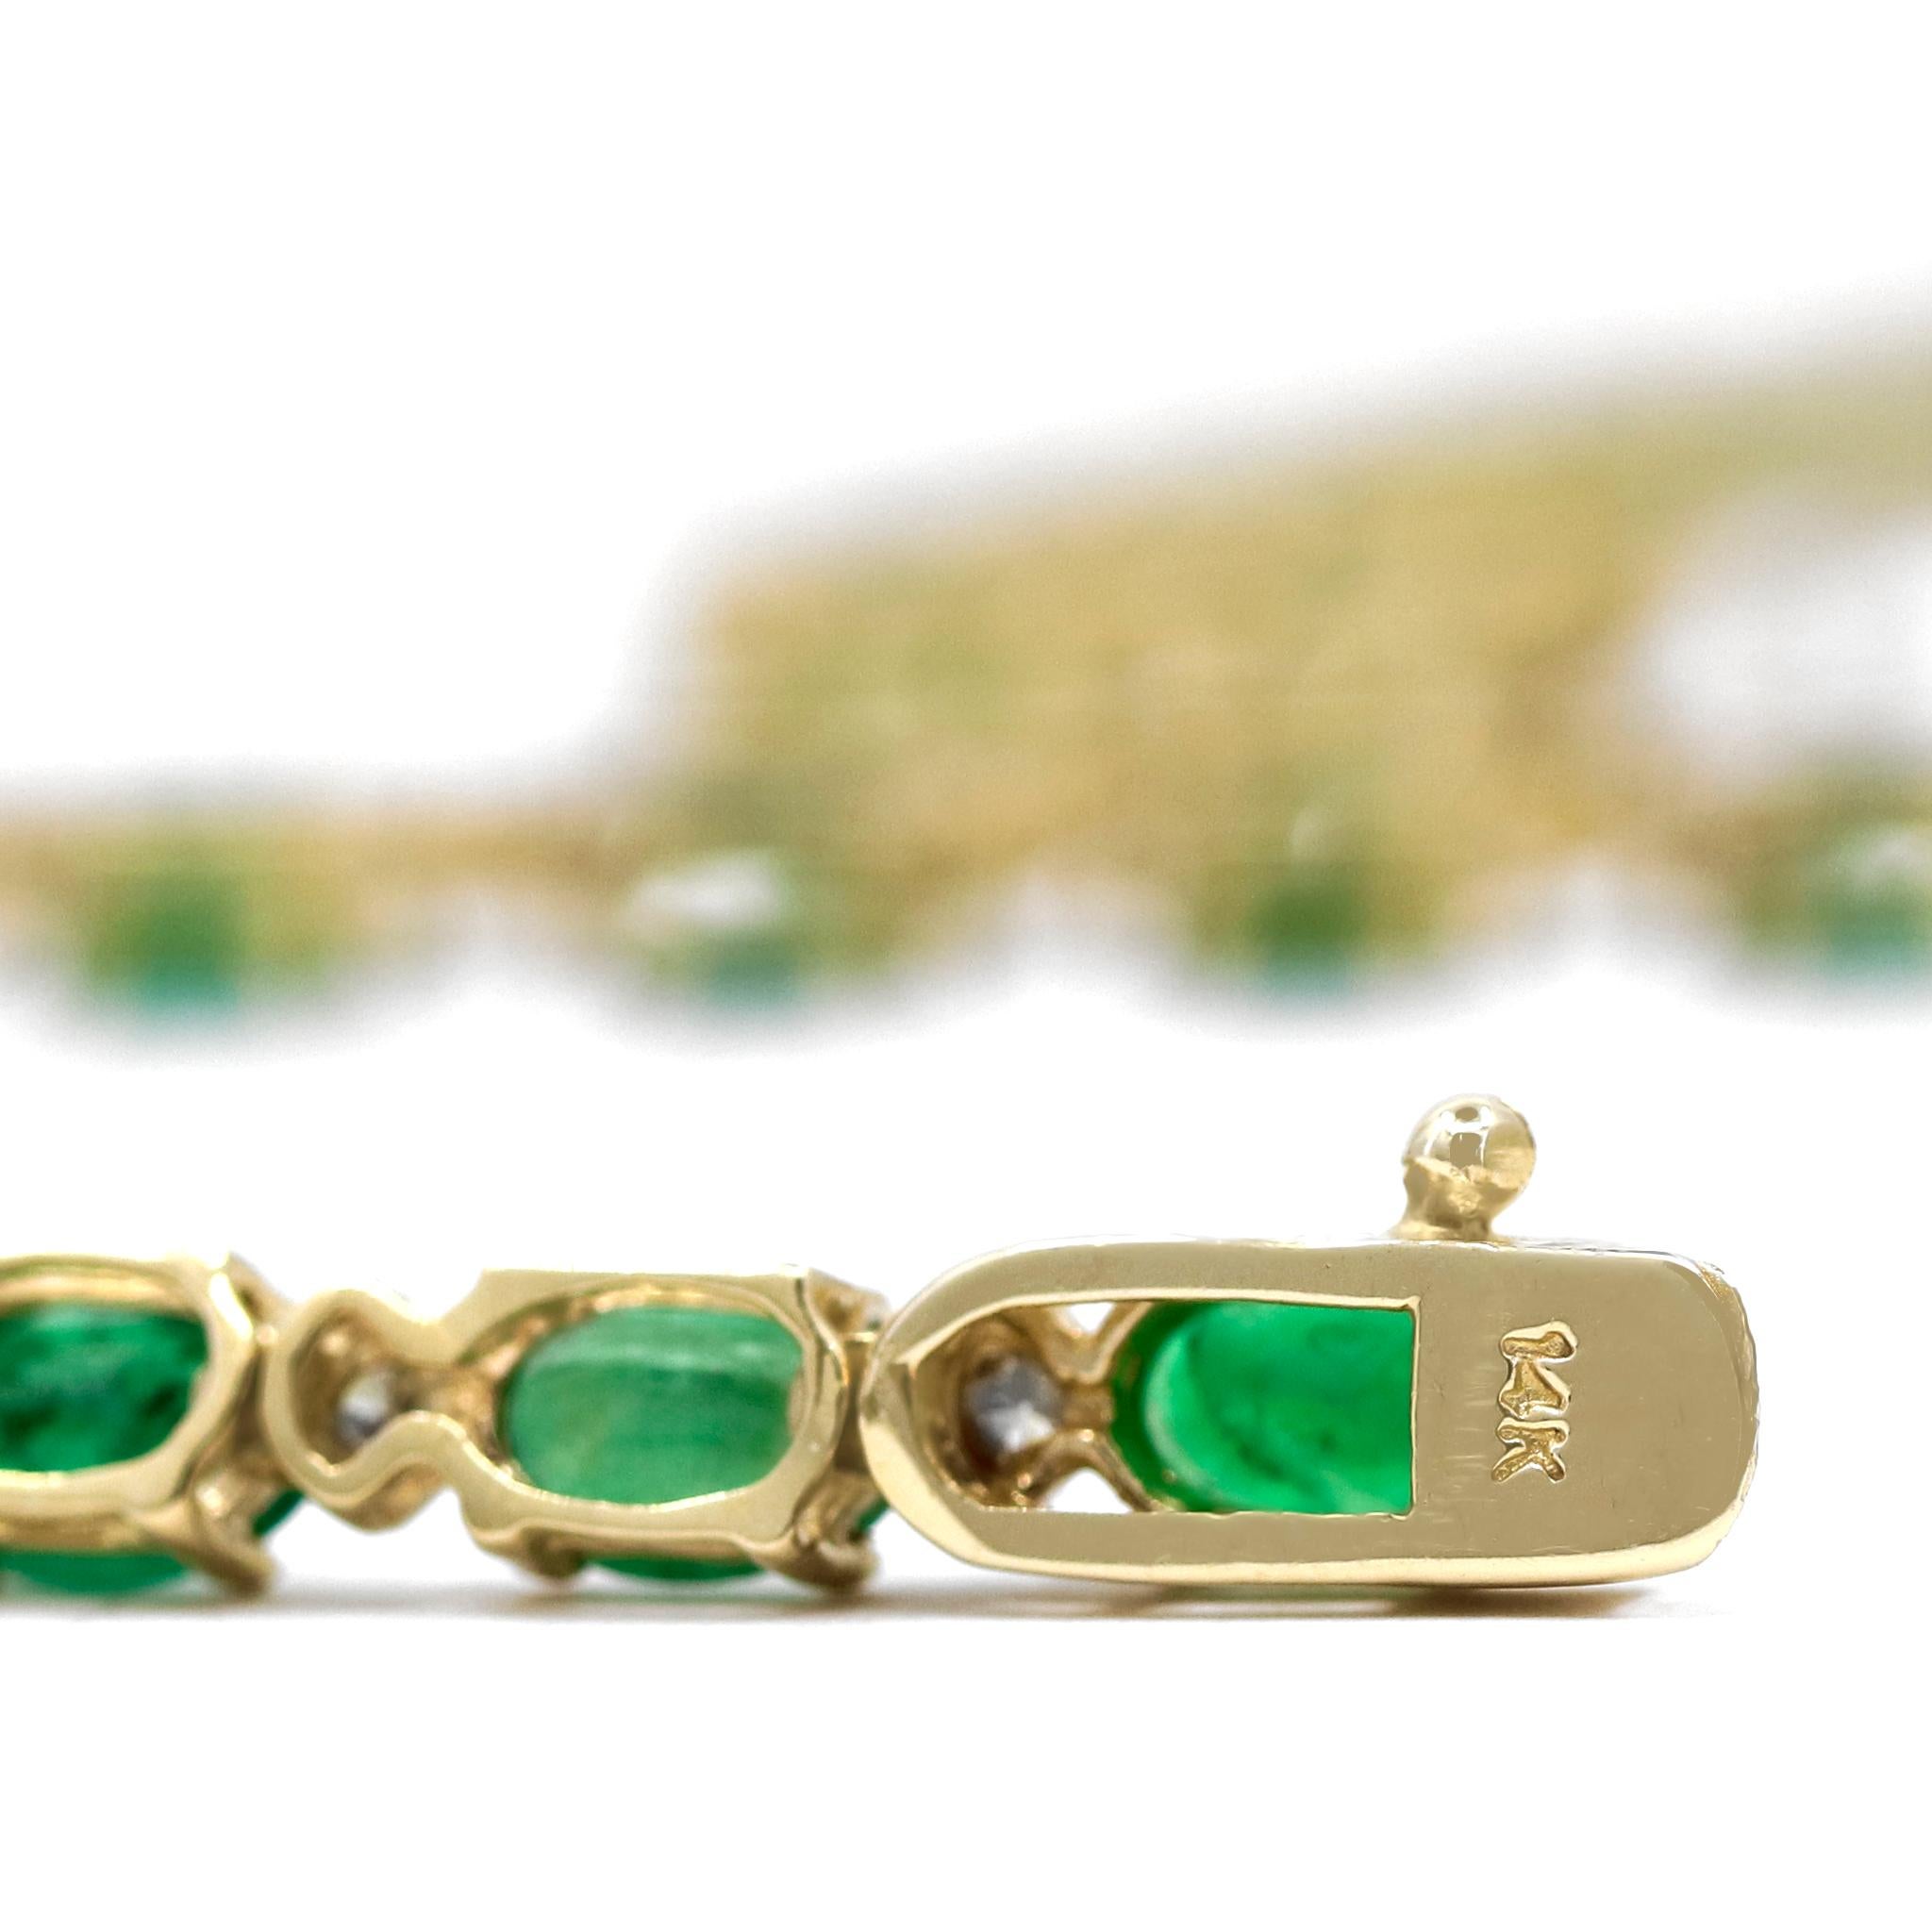 emerald green tennis necklace